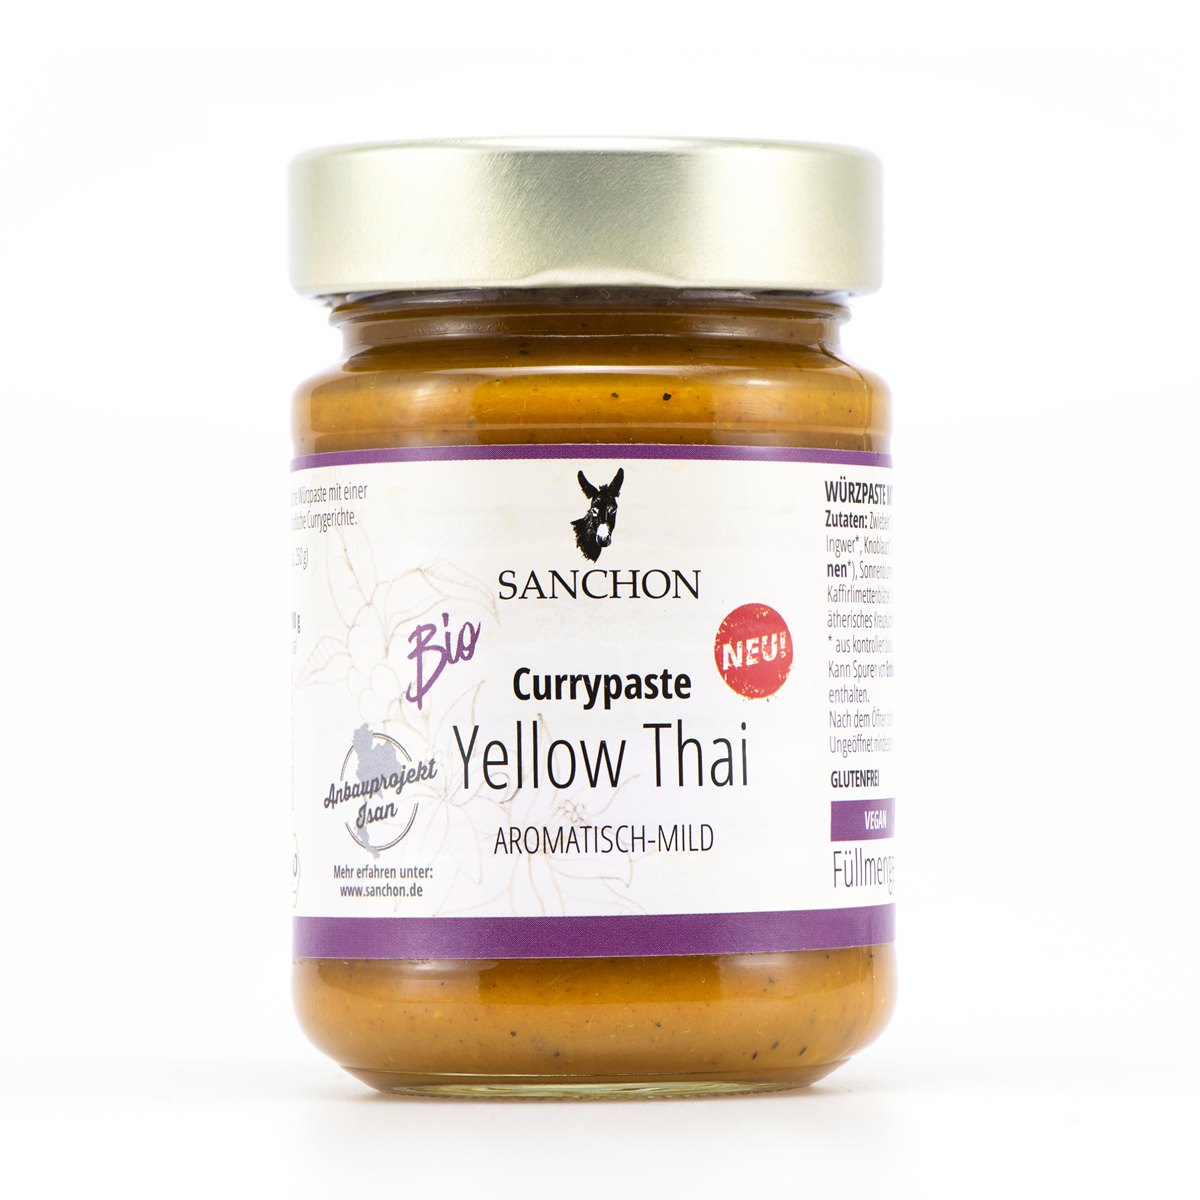 Sanchon Currypaste Yellow Thai 190g